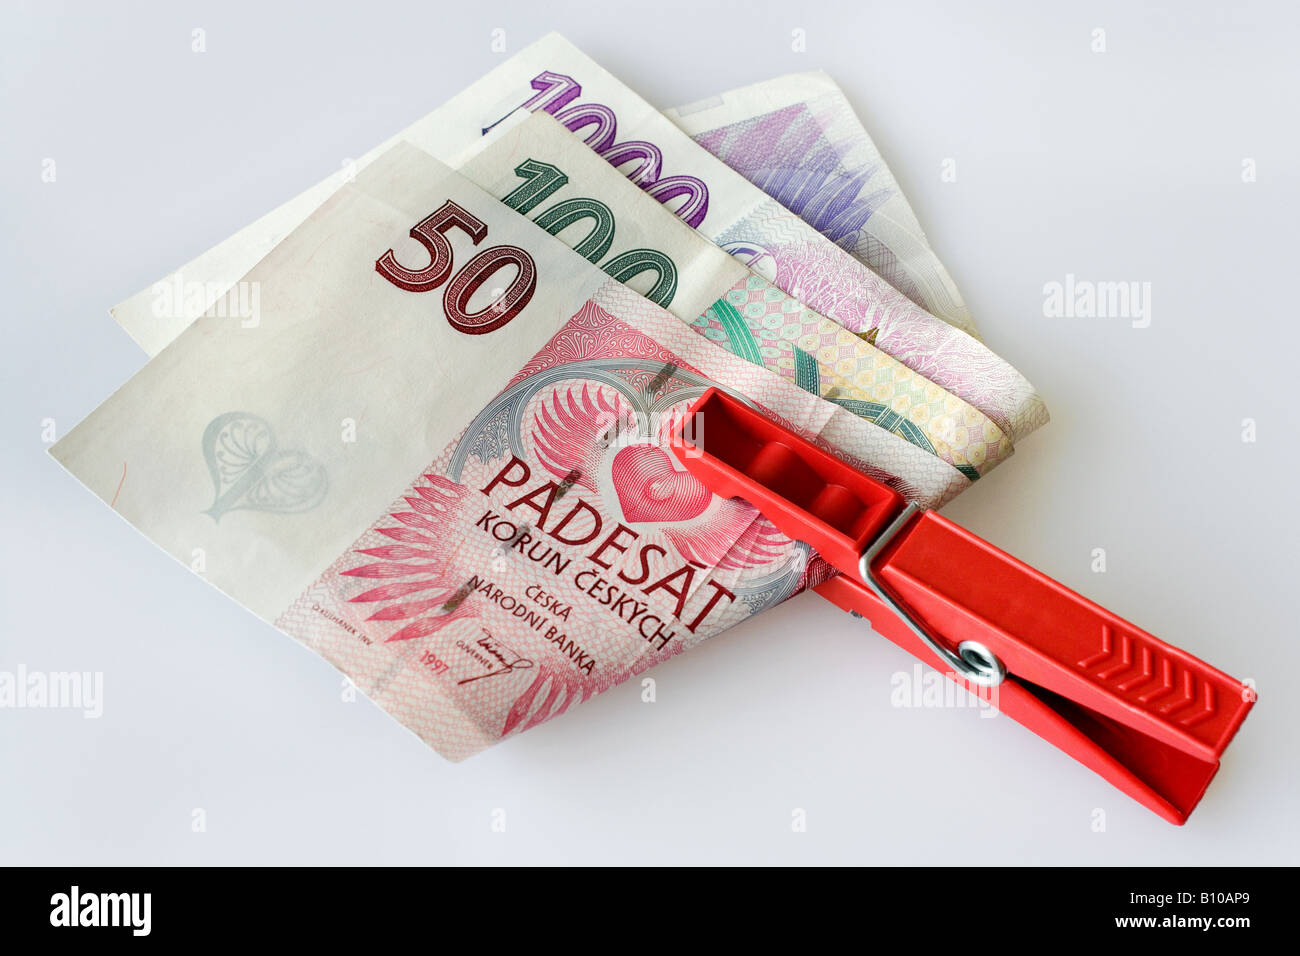 Ceske penize / Czech currency Stock Photo